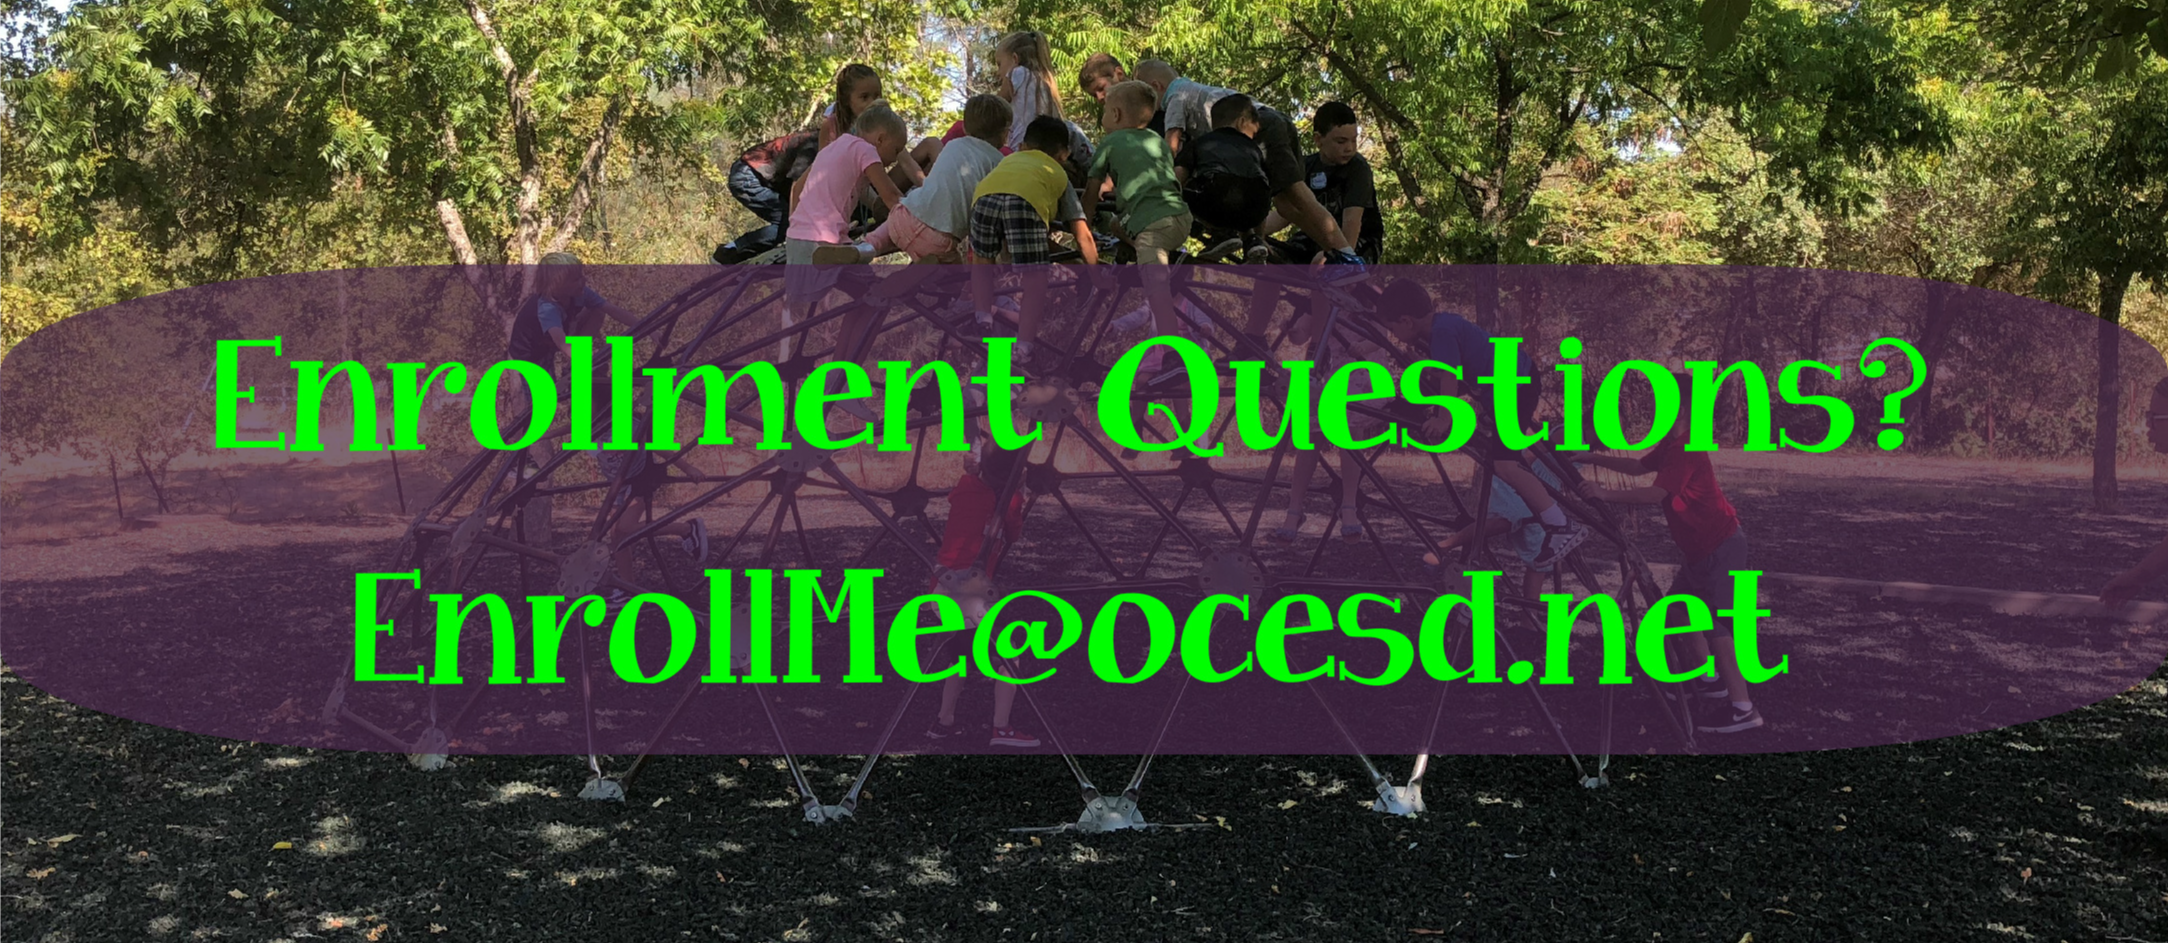 EnrollMe@ocesd.net Enrollment Questions?